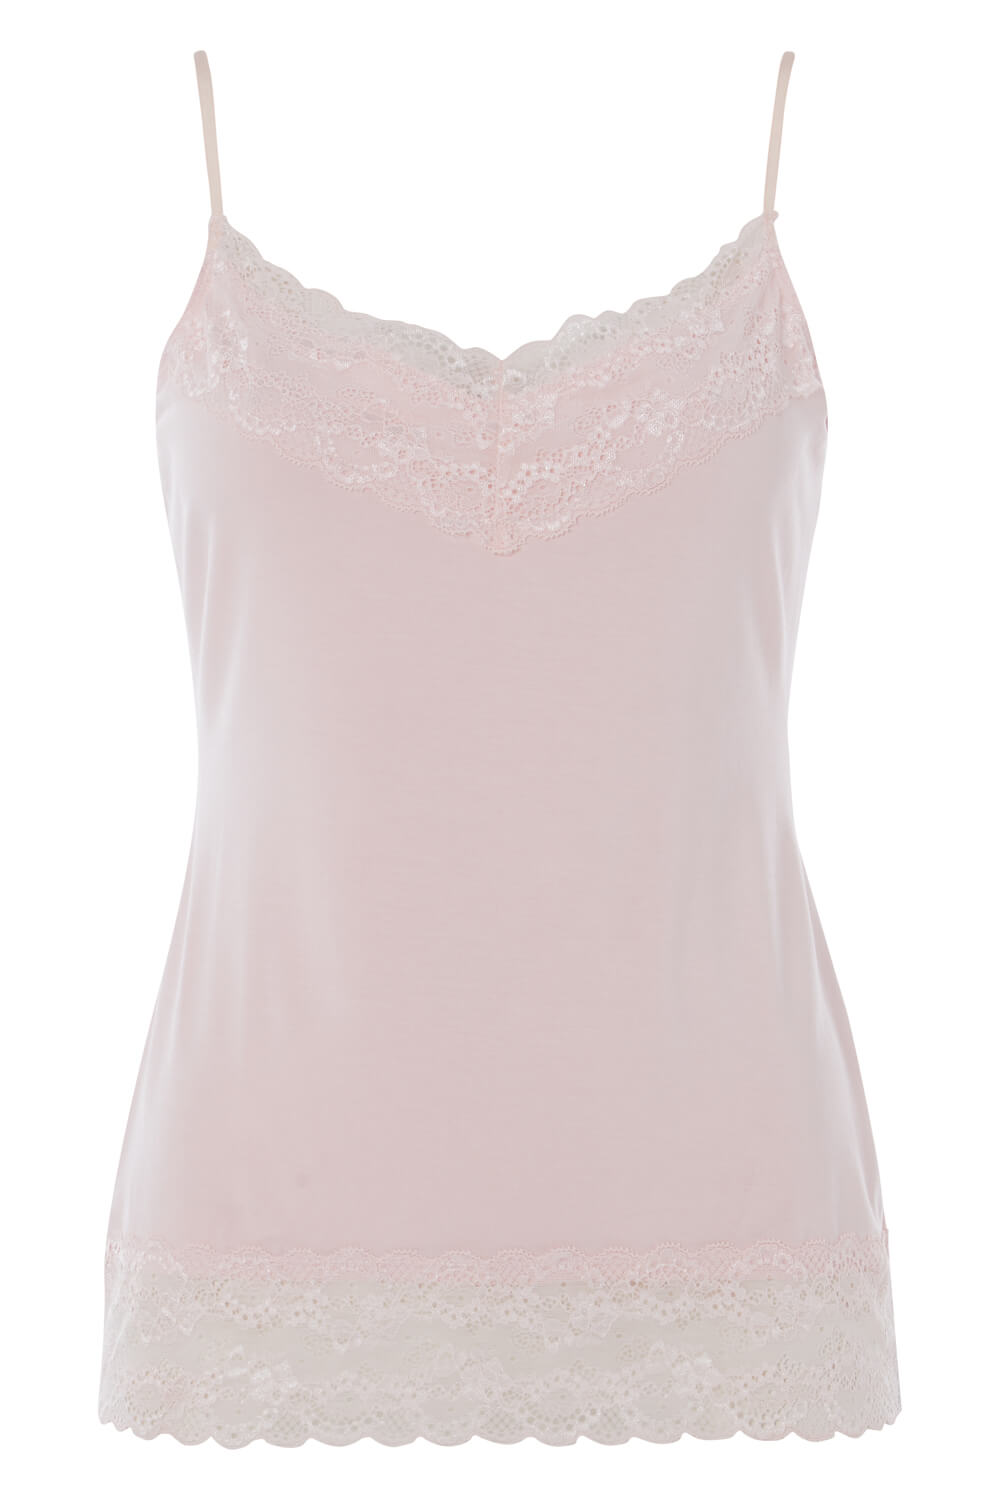 Lace Trim Camisole Top in Light Pink - Roman Originals UK